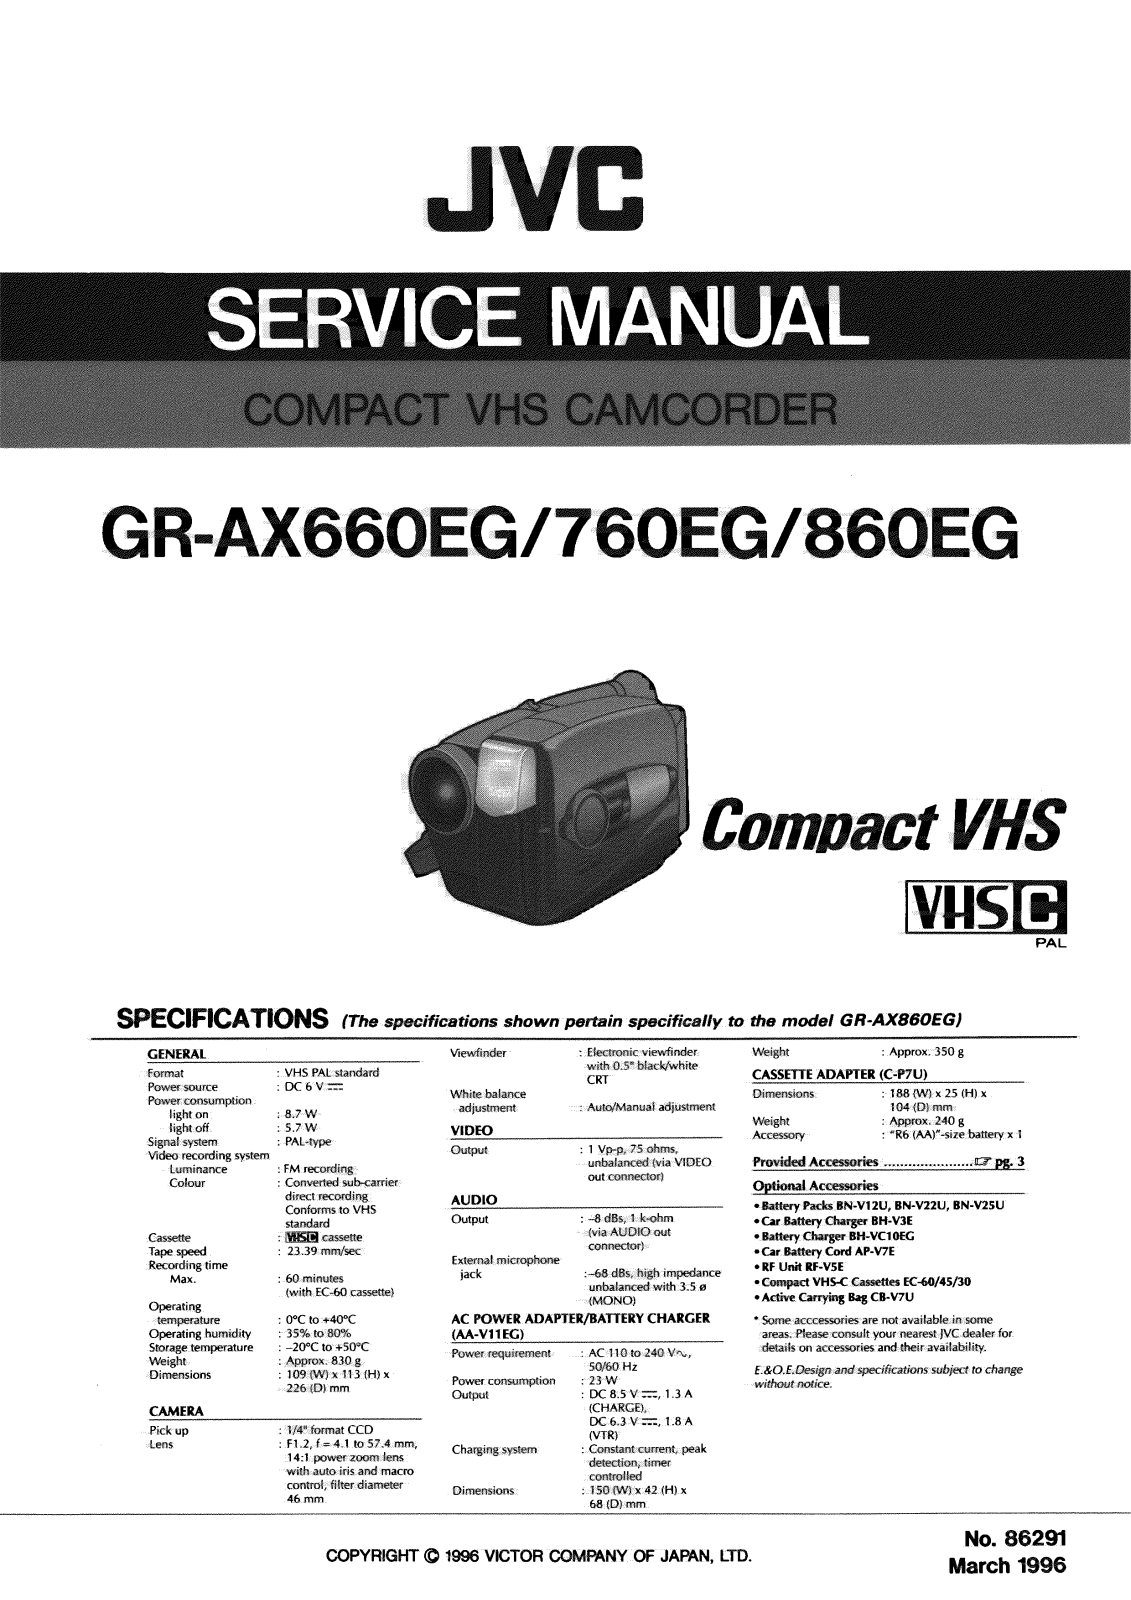 JVC GR-AX660EG, GR-AX760EG, GR-AX860EG Service Manual